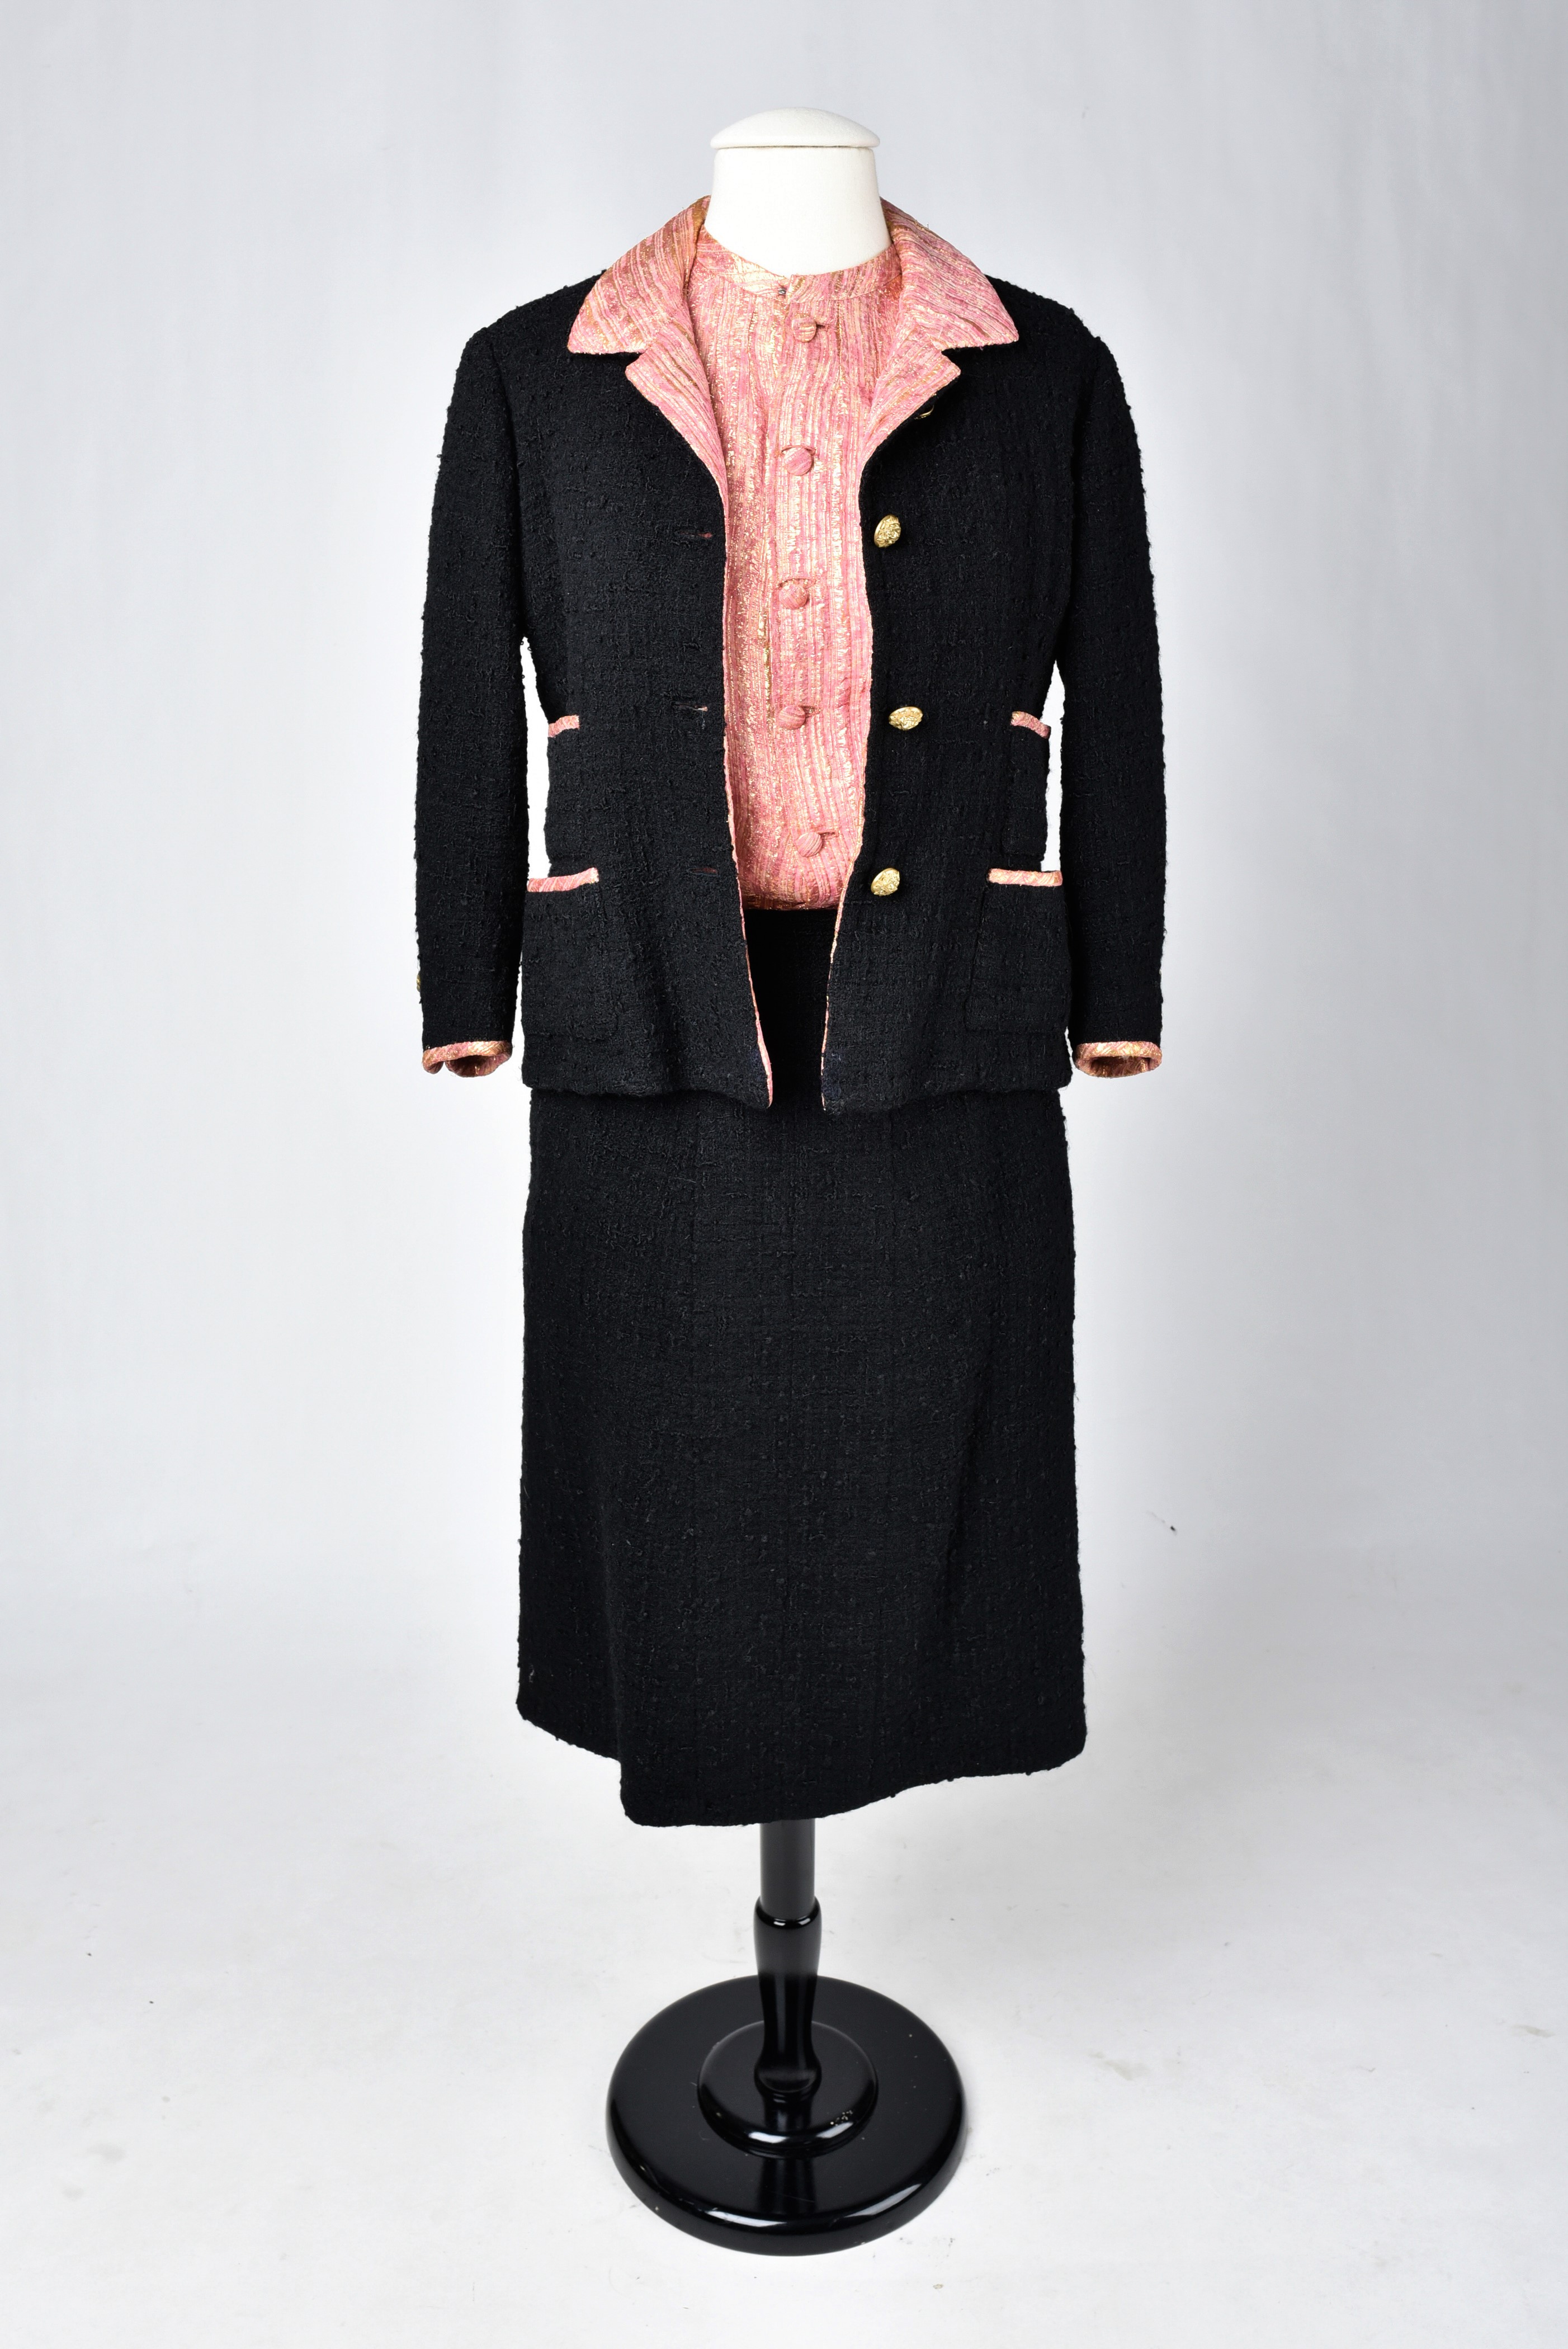 1938 – Gabrielle Chanel, Red velvet suit